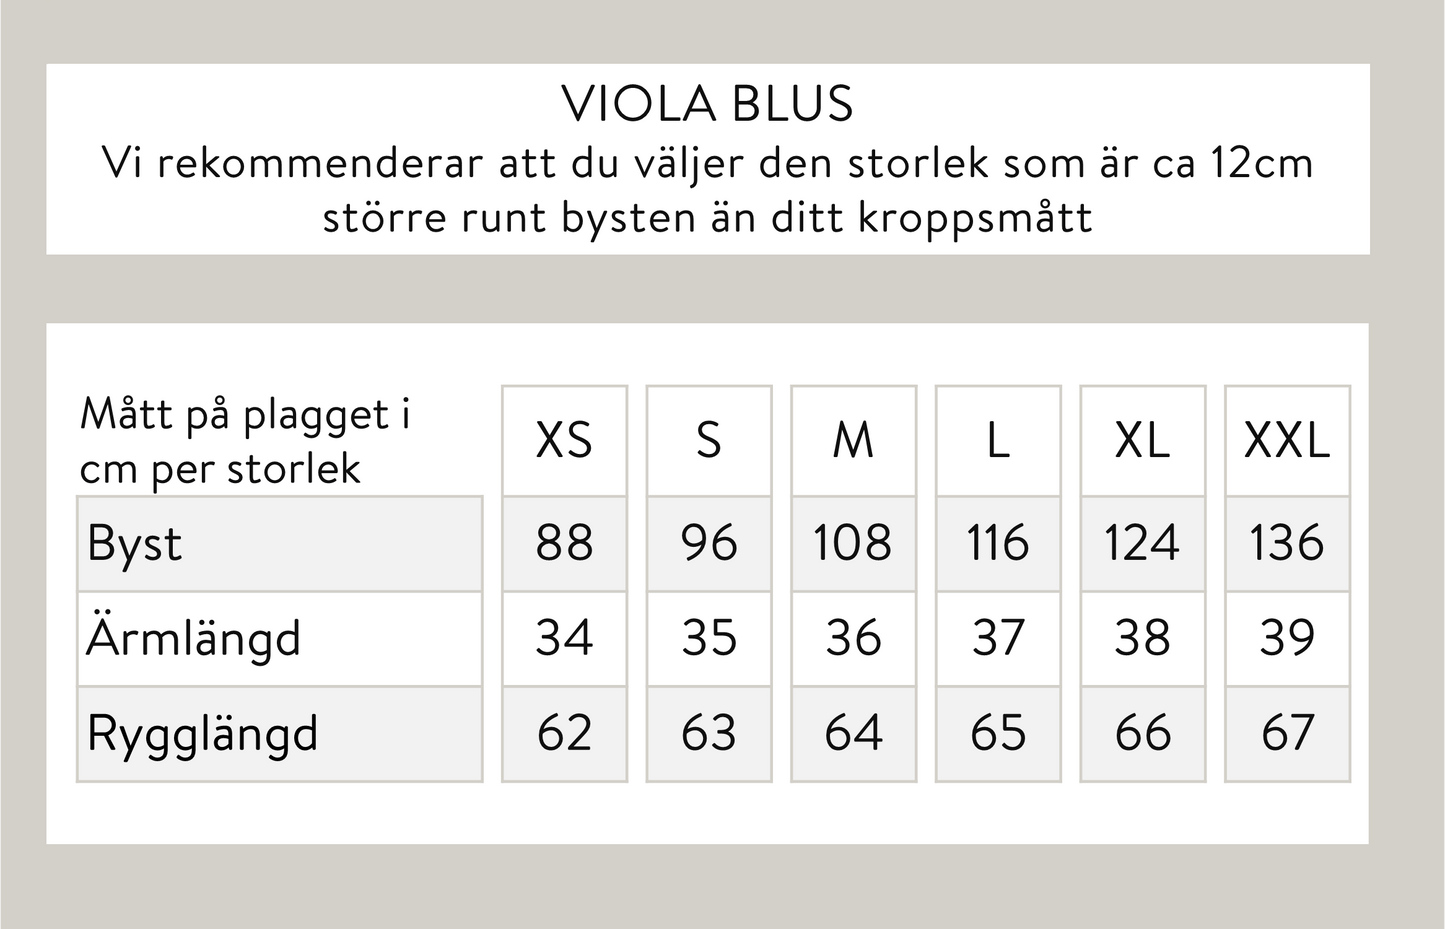 Viola blus - svart